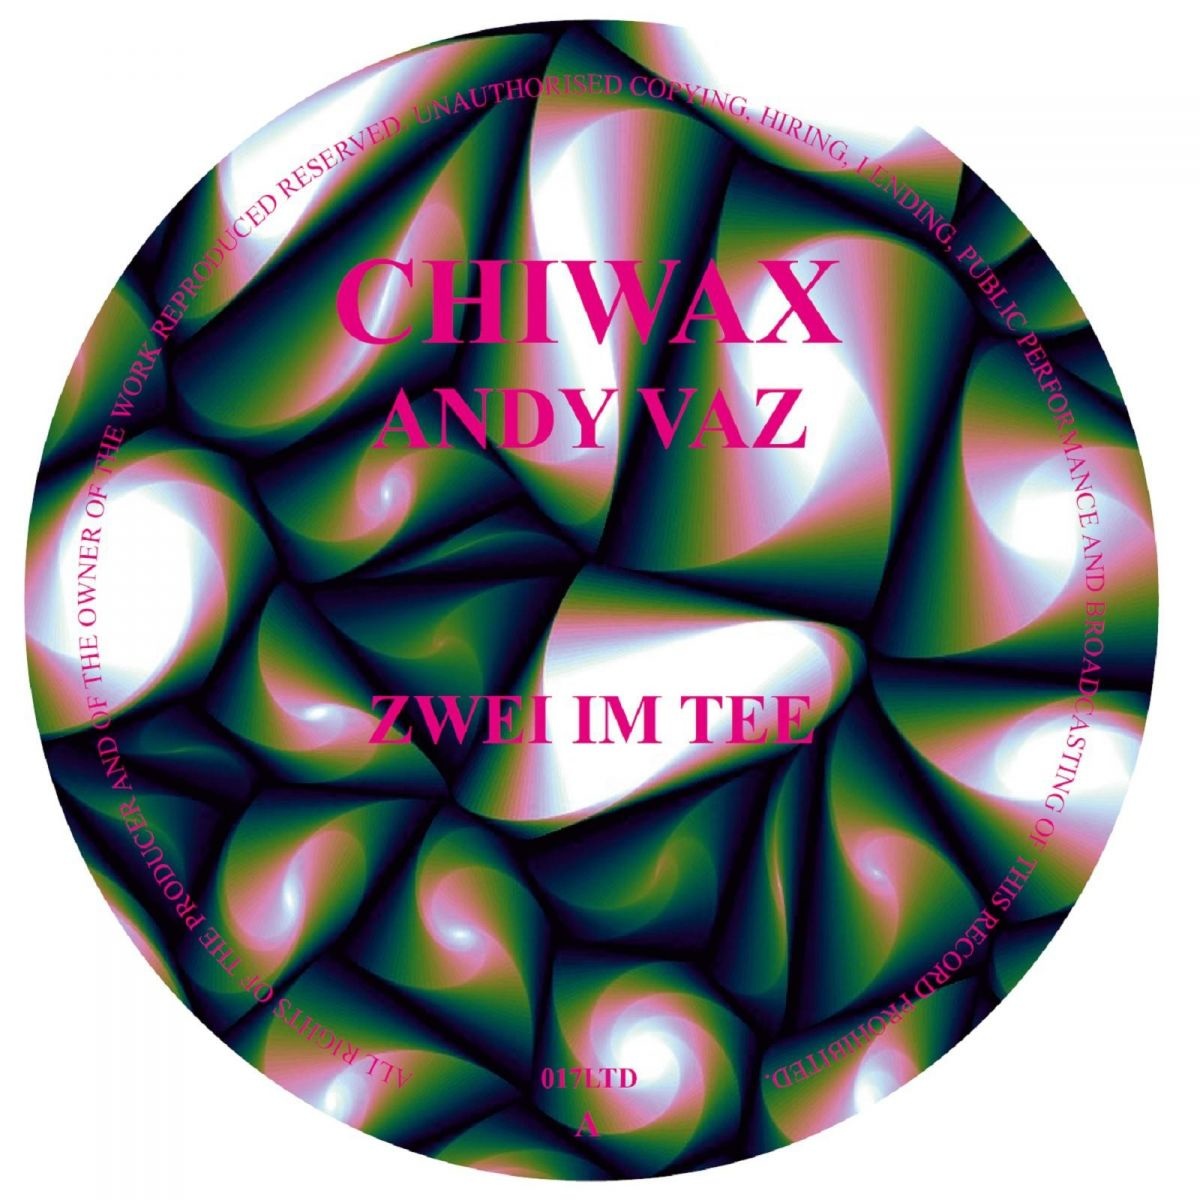 Andy Vaz - Zwei Im Tee / Chiwax